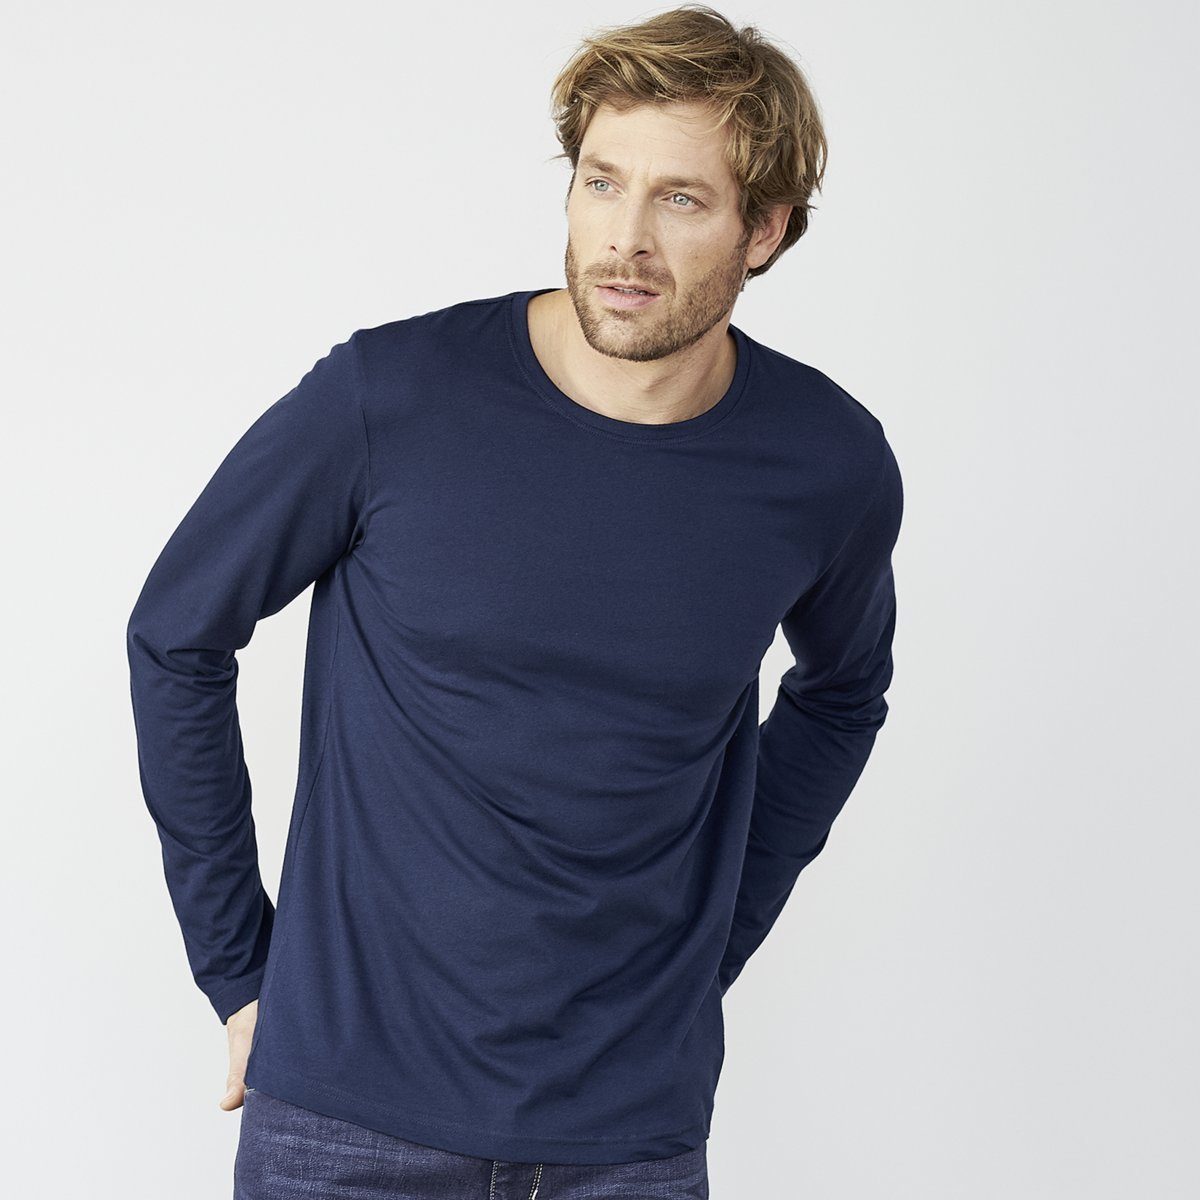 Hochwertiges Jersey aus feinem LIVING CRAFTS Langarm-Shirt Navy Langarmshirt FRANK Single